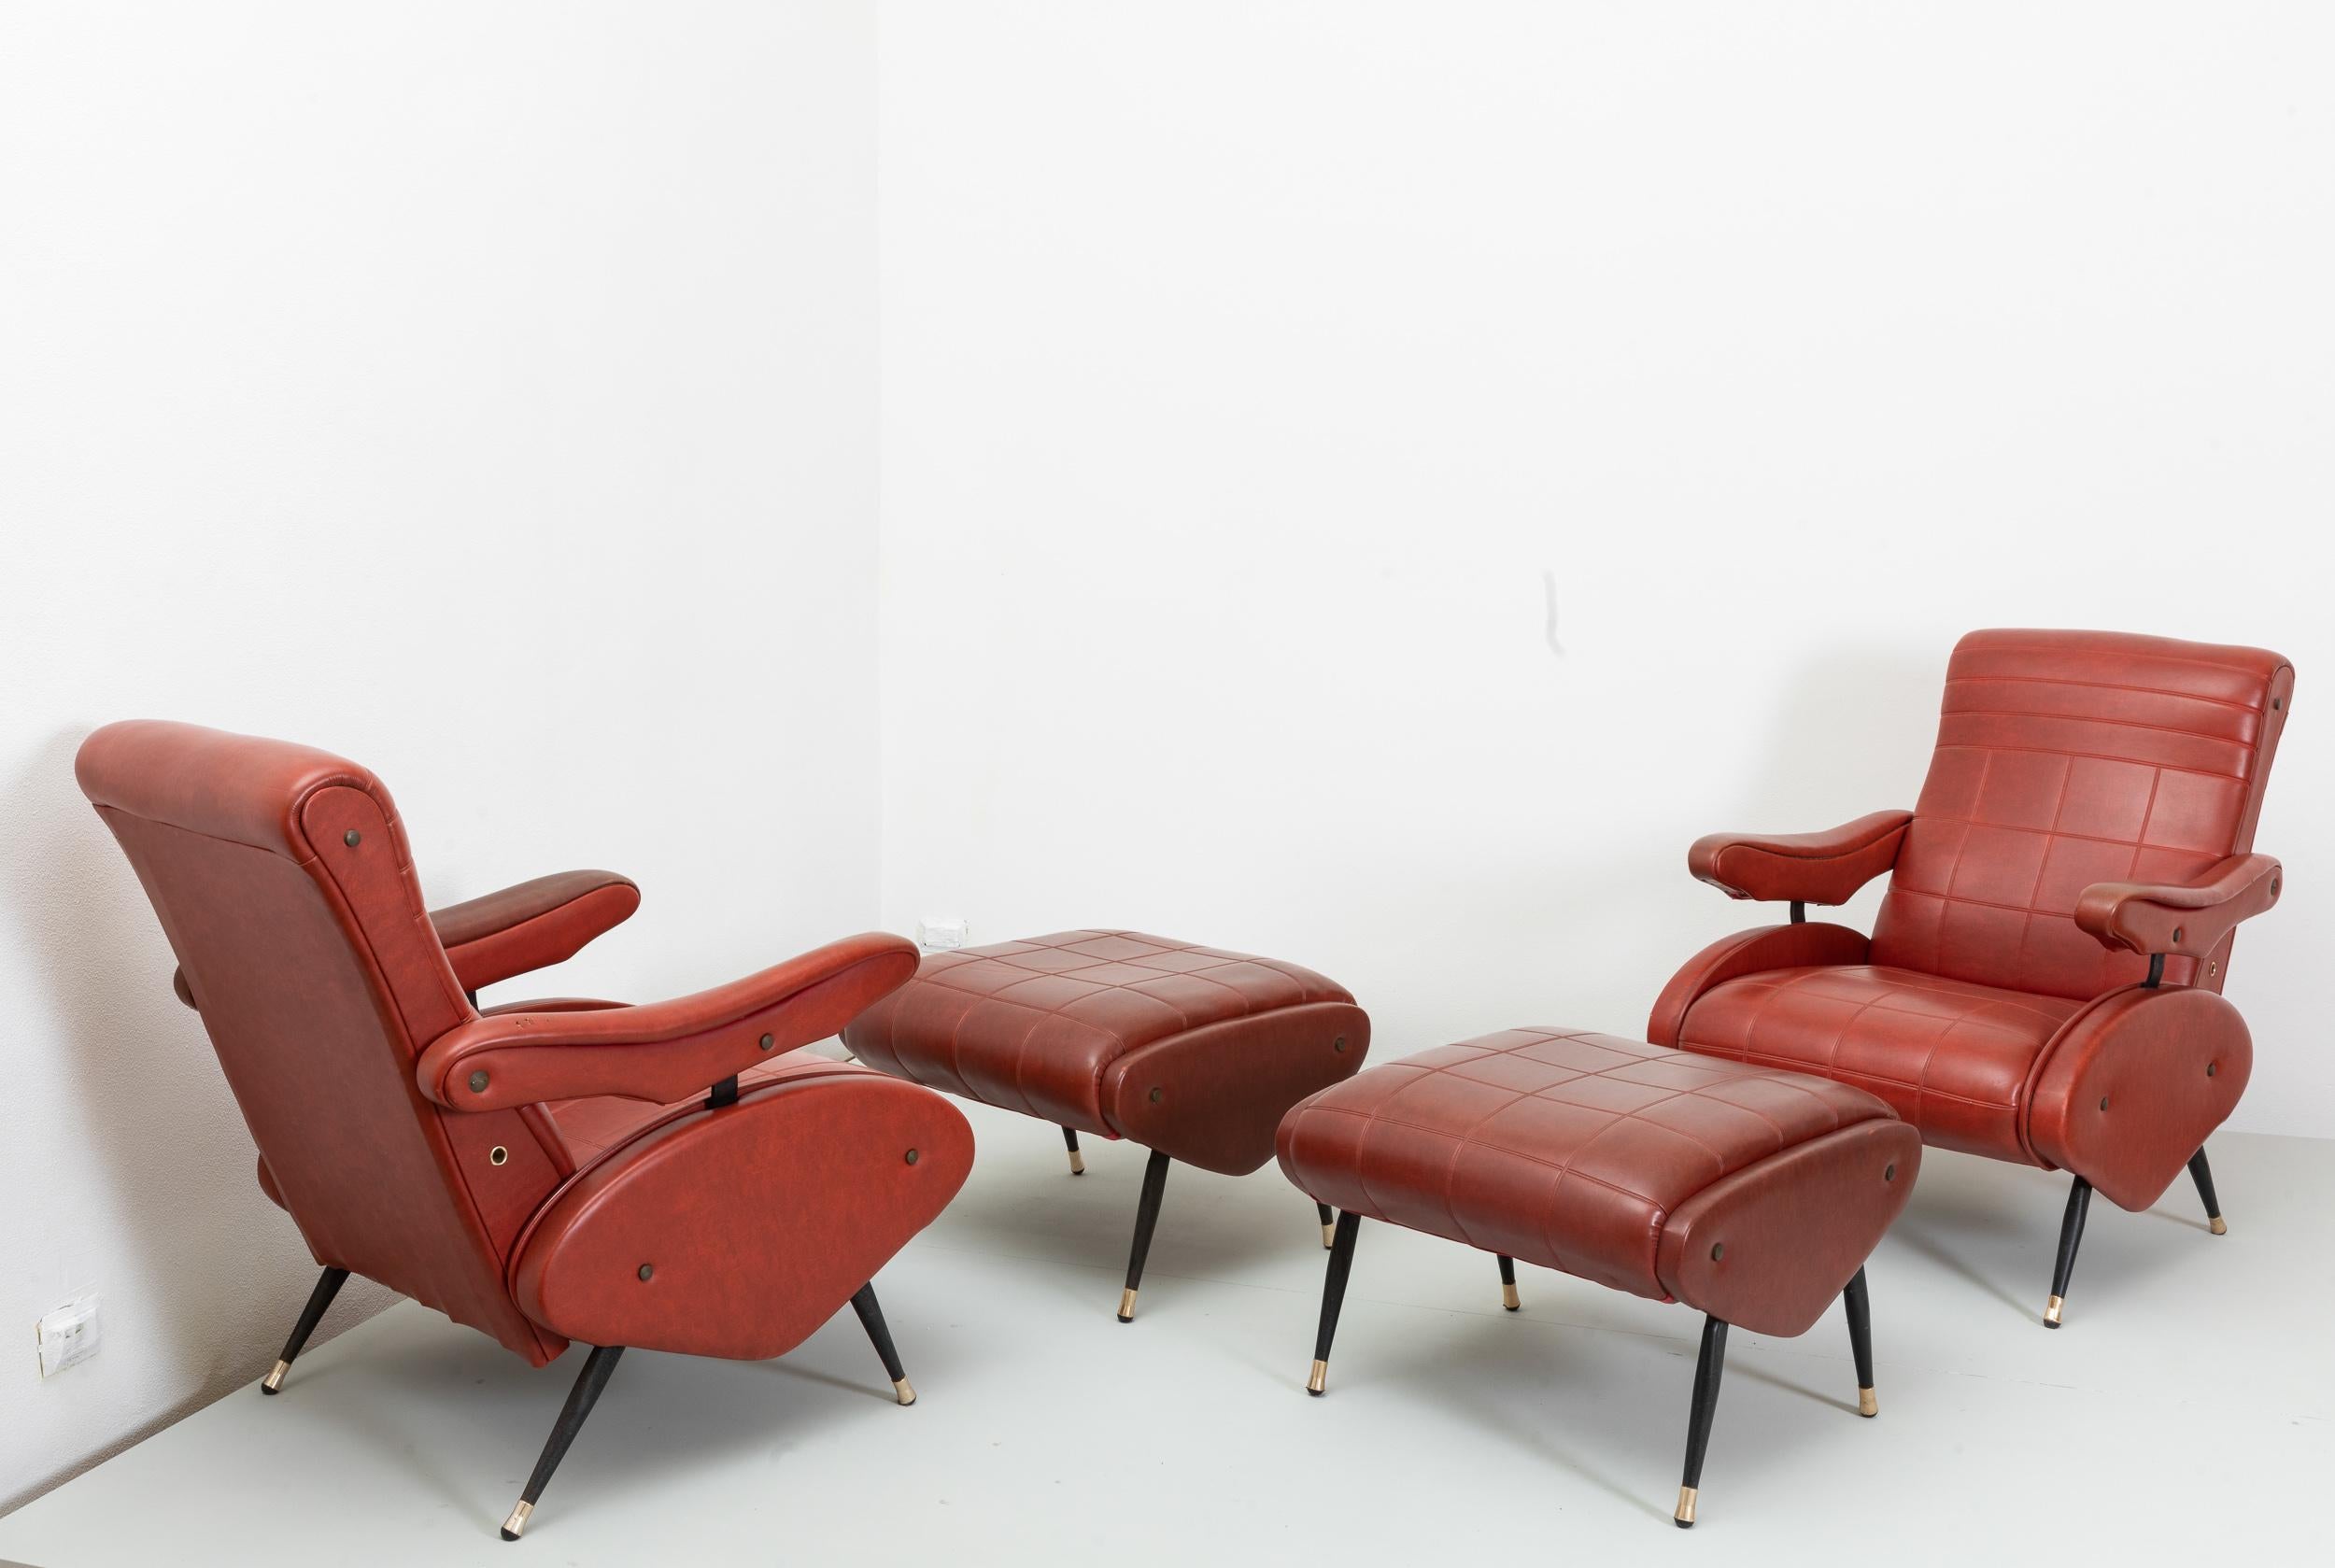 Nello Pini Prod. Novarredo c. 1950-1960 Two reclining armchairs and two pouffs 10